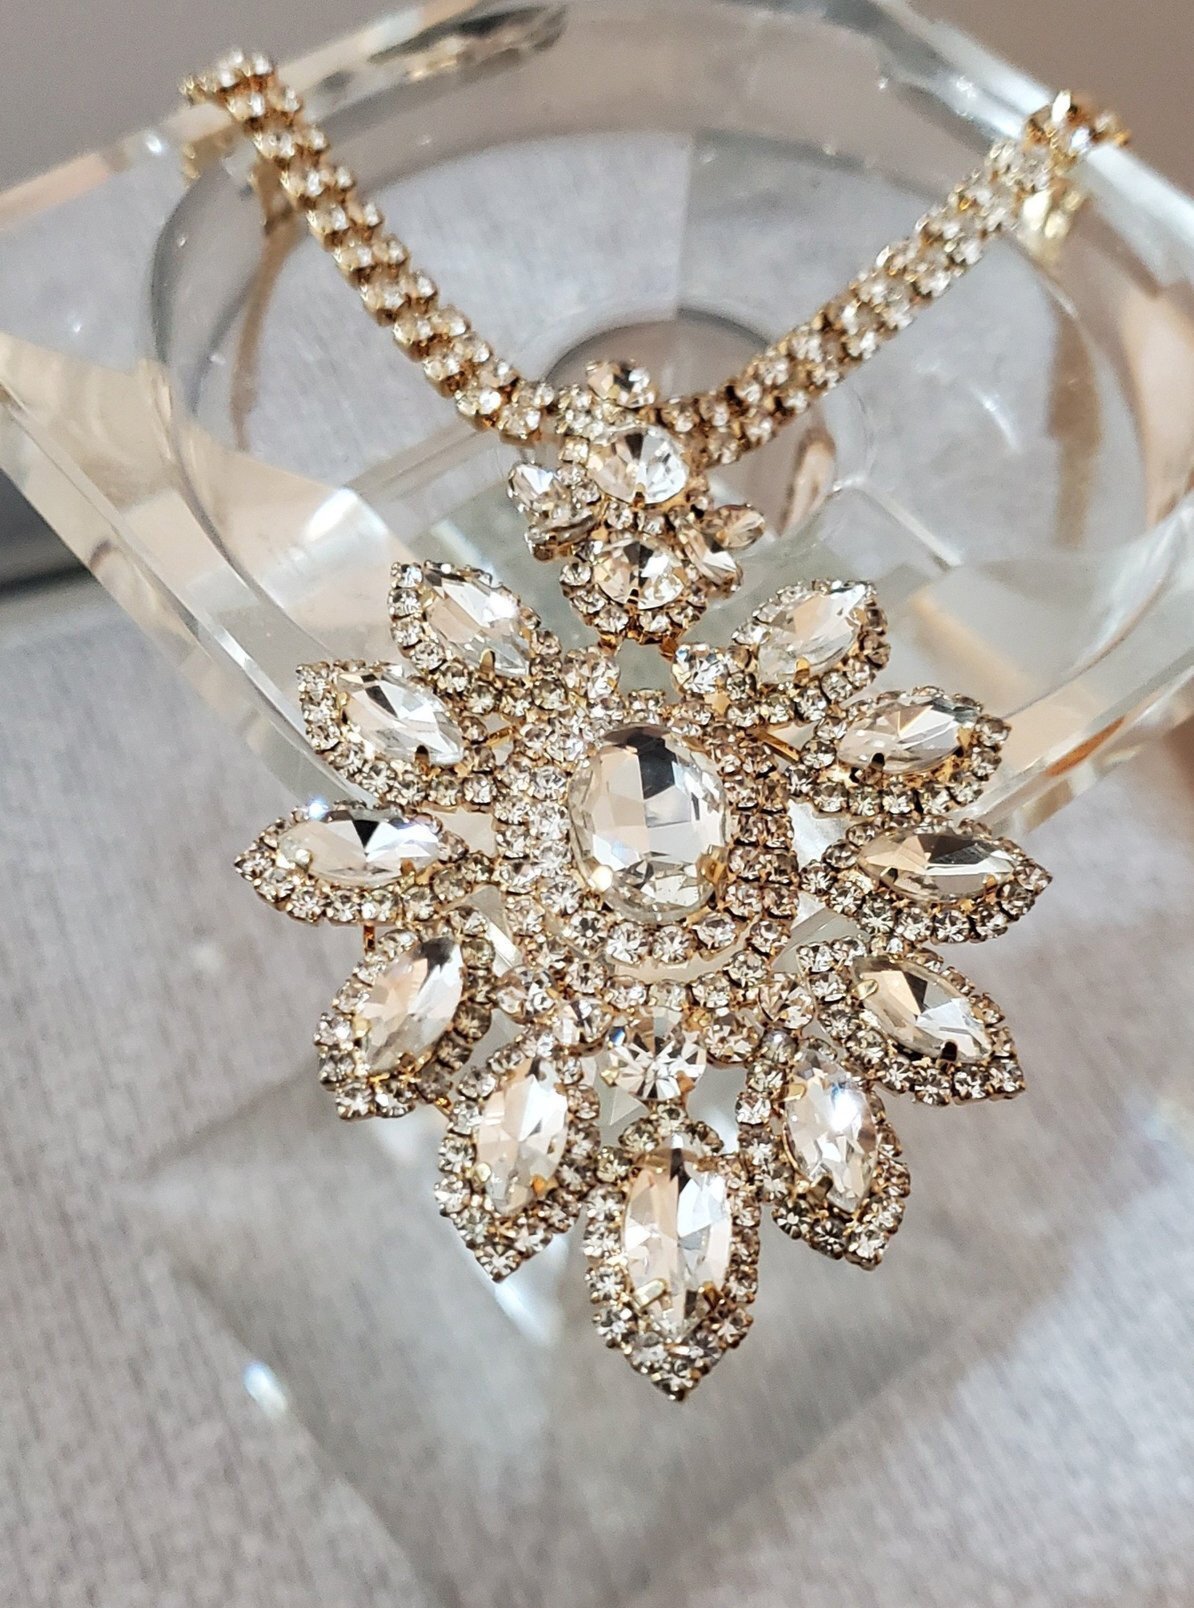 Star Struck Pendant Necklace - Bonafide Glam